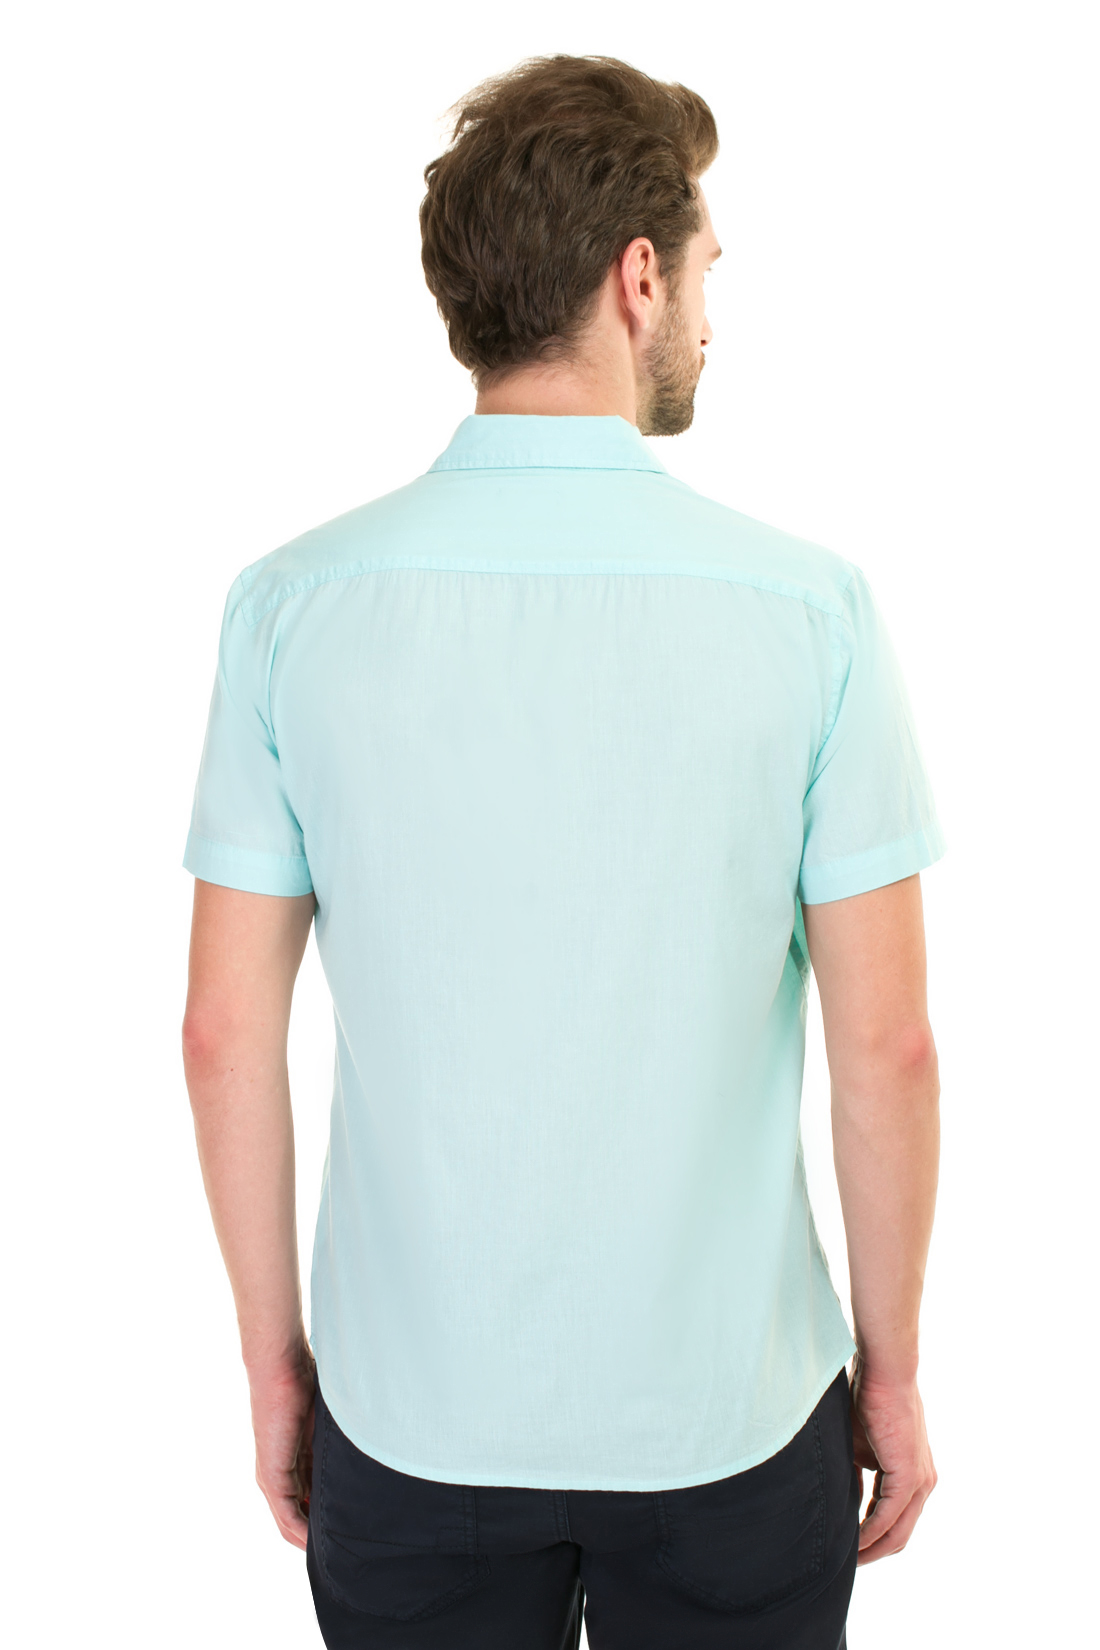 Базовая рубашка с коротким рукавом (арт. baon B687025), размер M, цвет голубой Базовая рубашка с коротким рукавом (арт. baon B687025) - фото 2